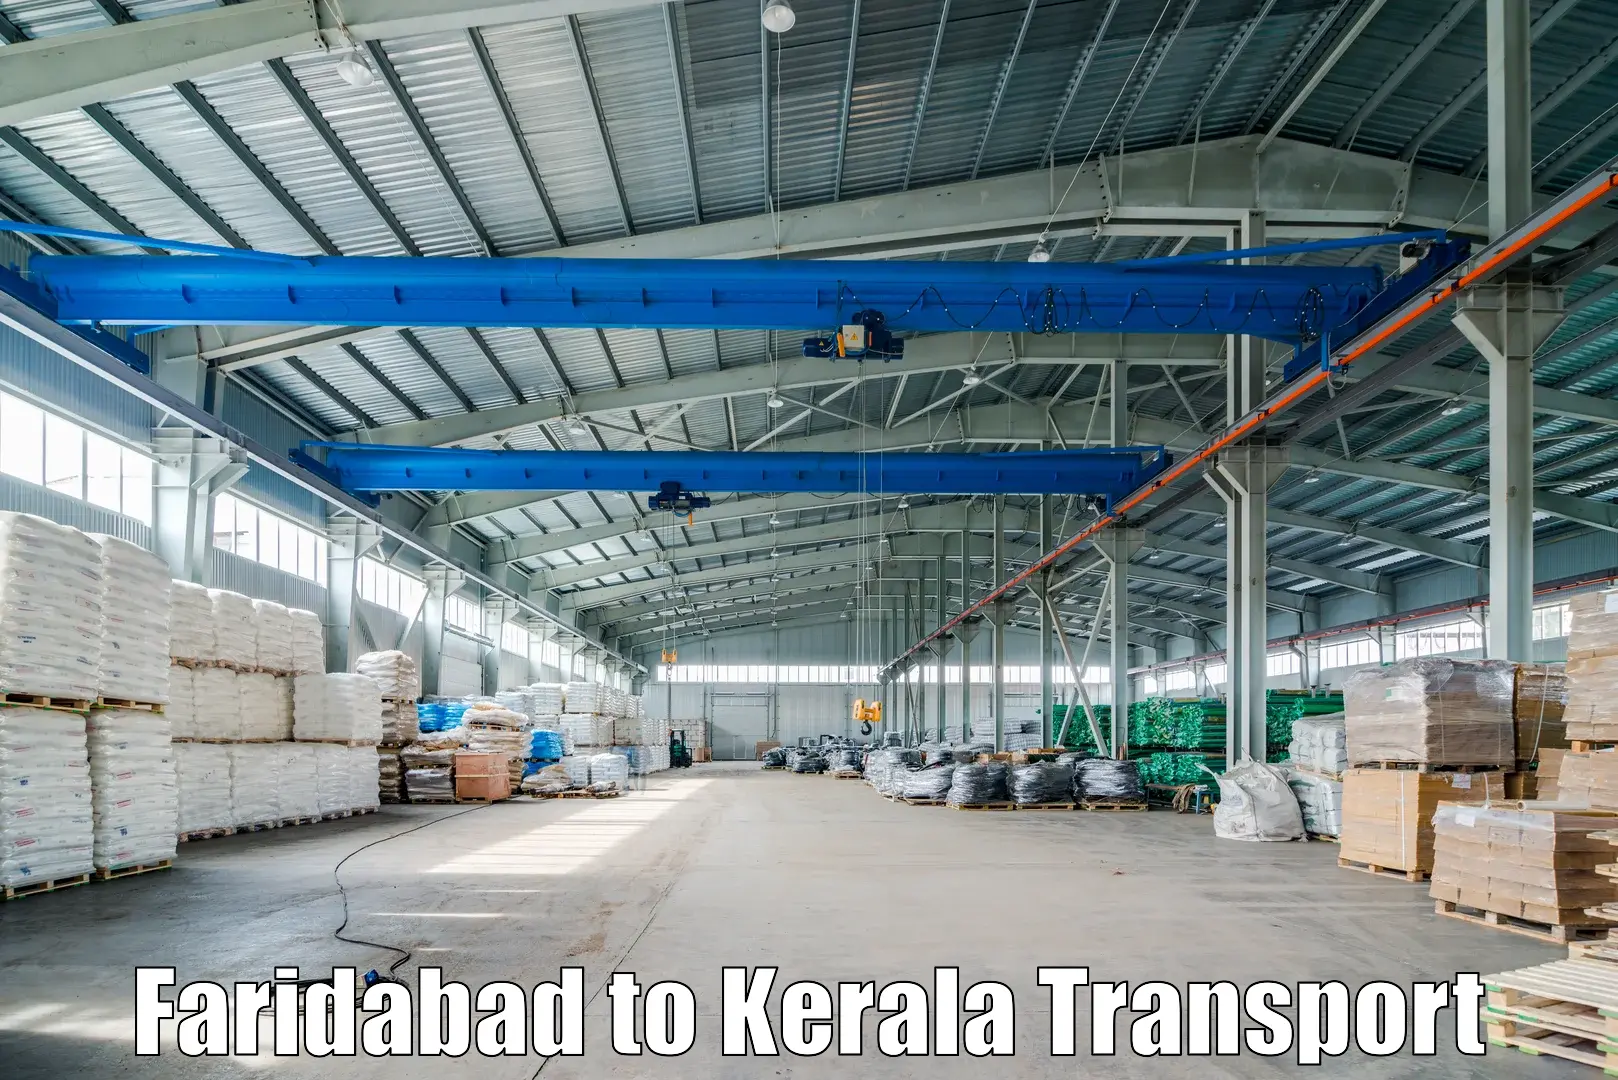 Transport shared services in Faridabad to Kalpetta